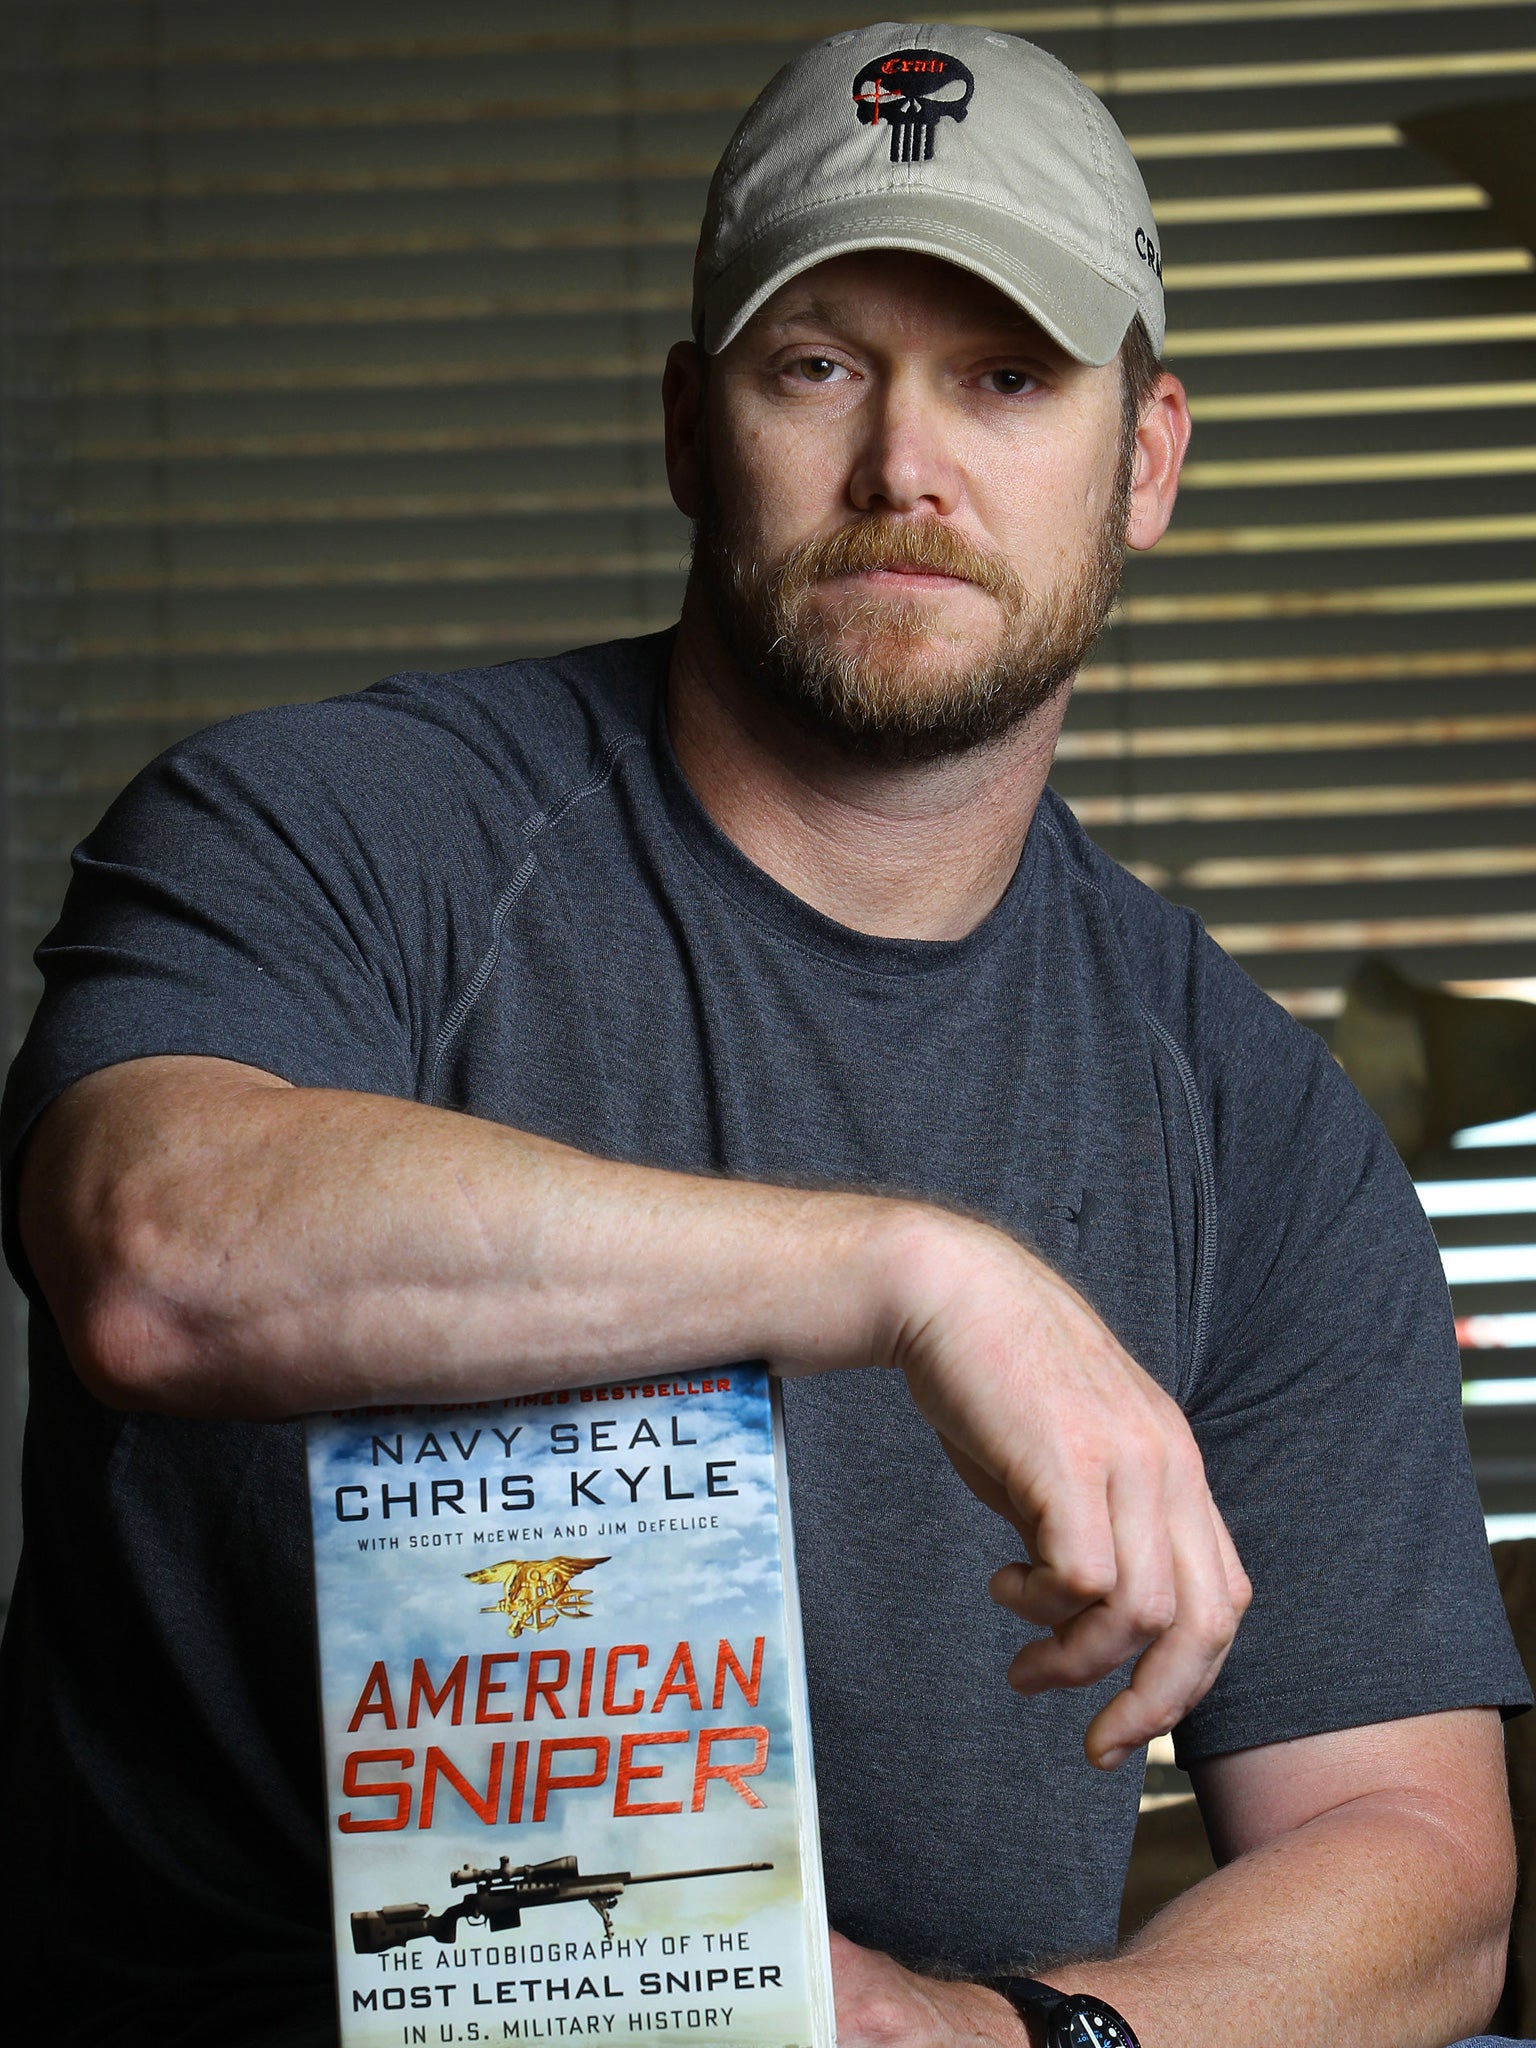 Chris Kyle: US Navy Seal sniper